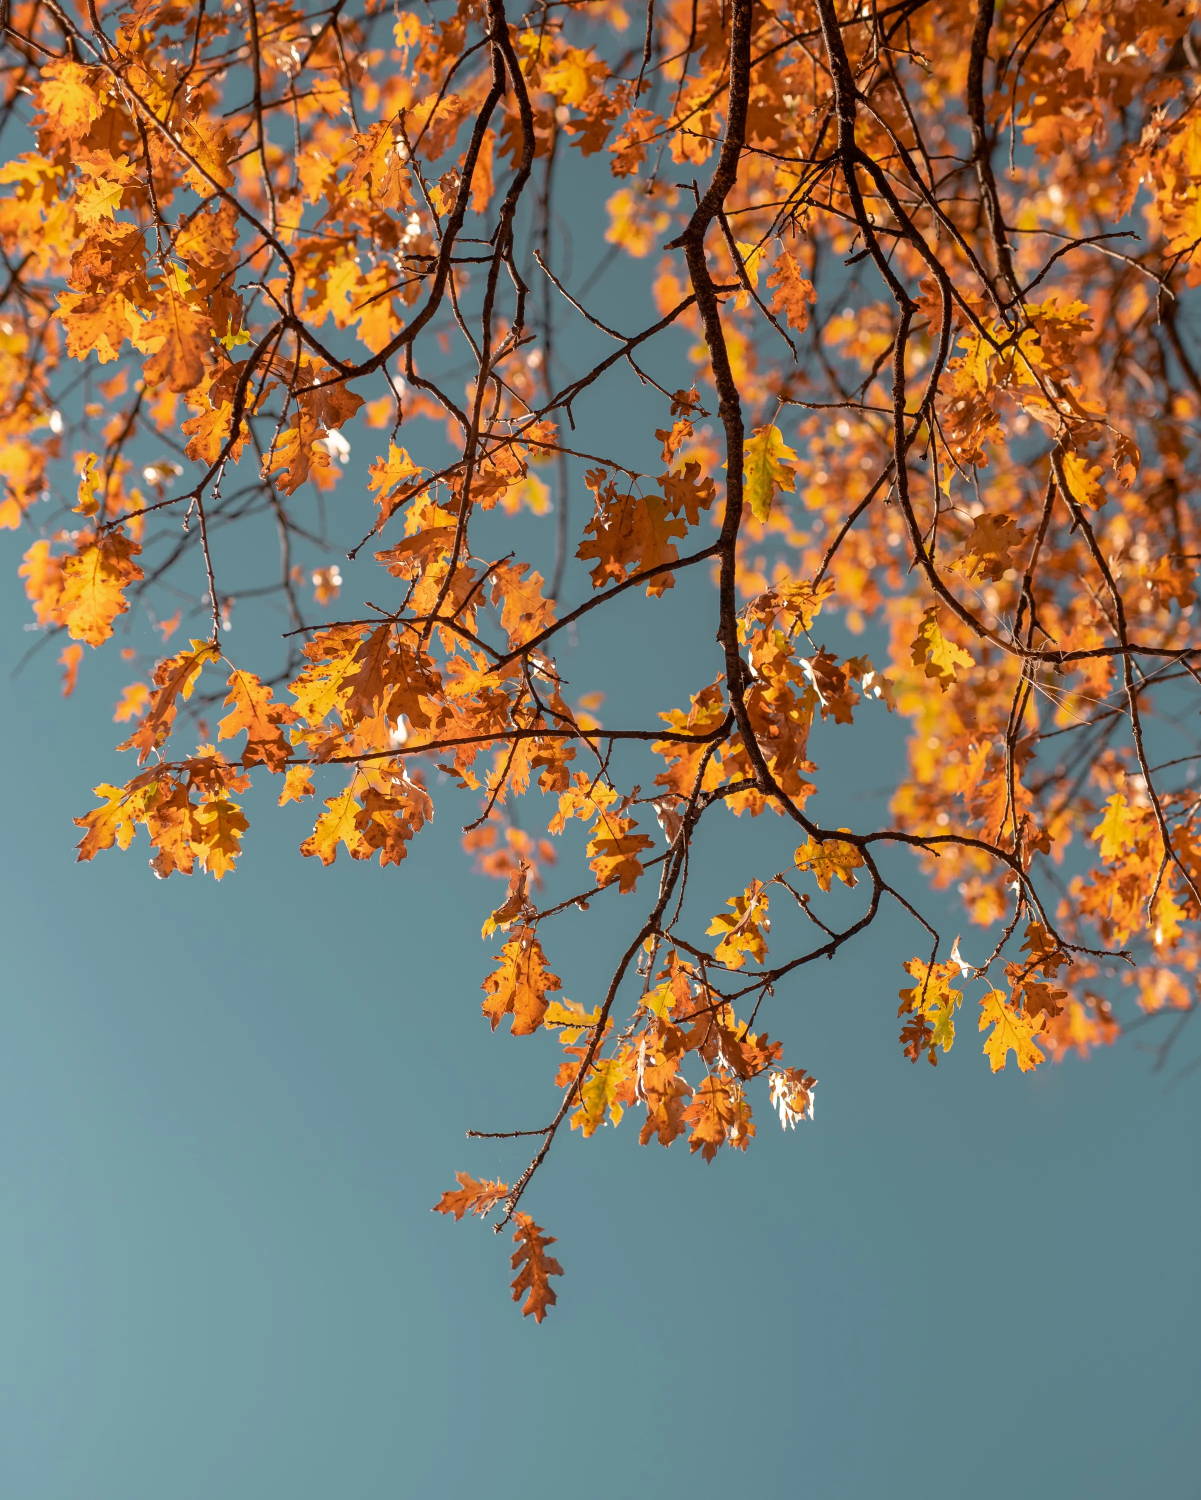 Orange autumn leaves against a blue sky